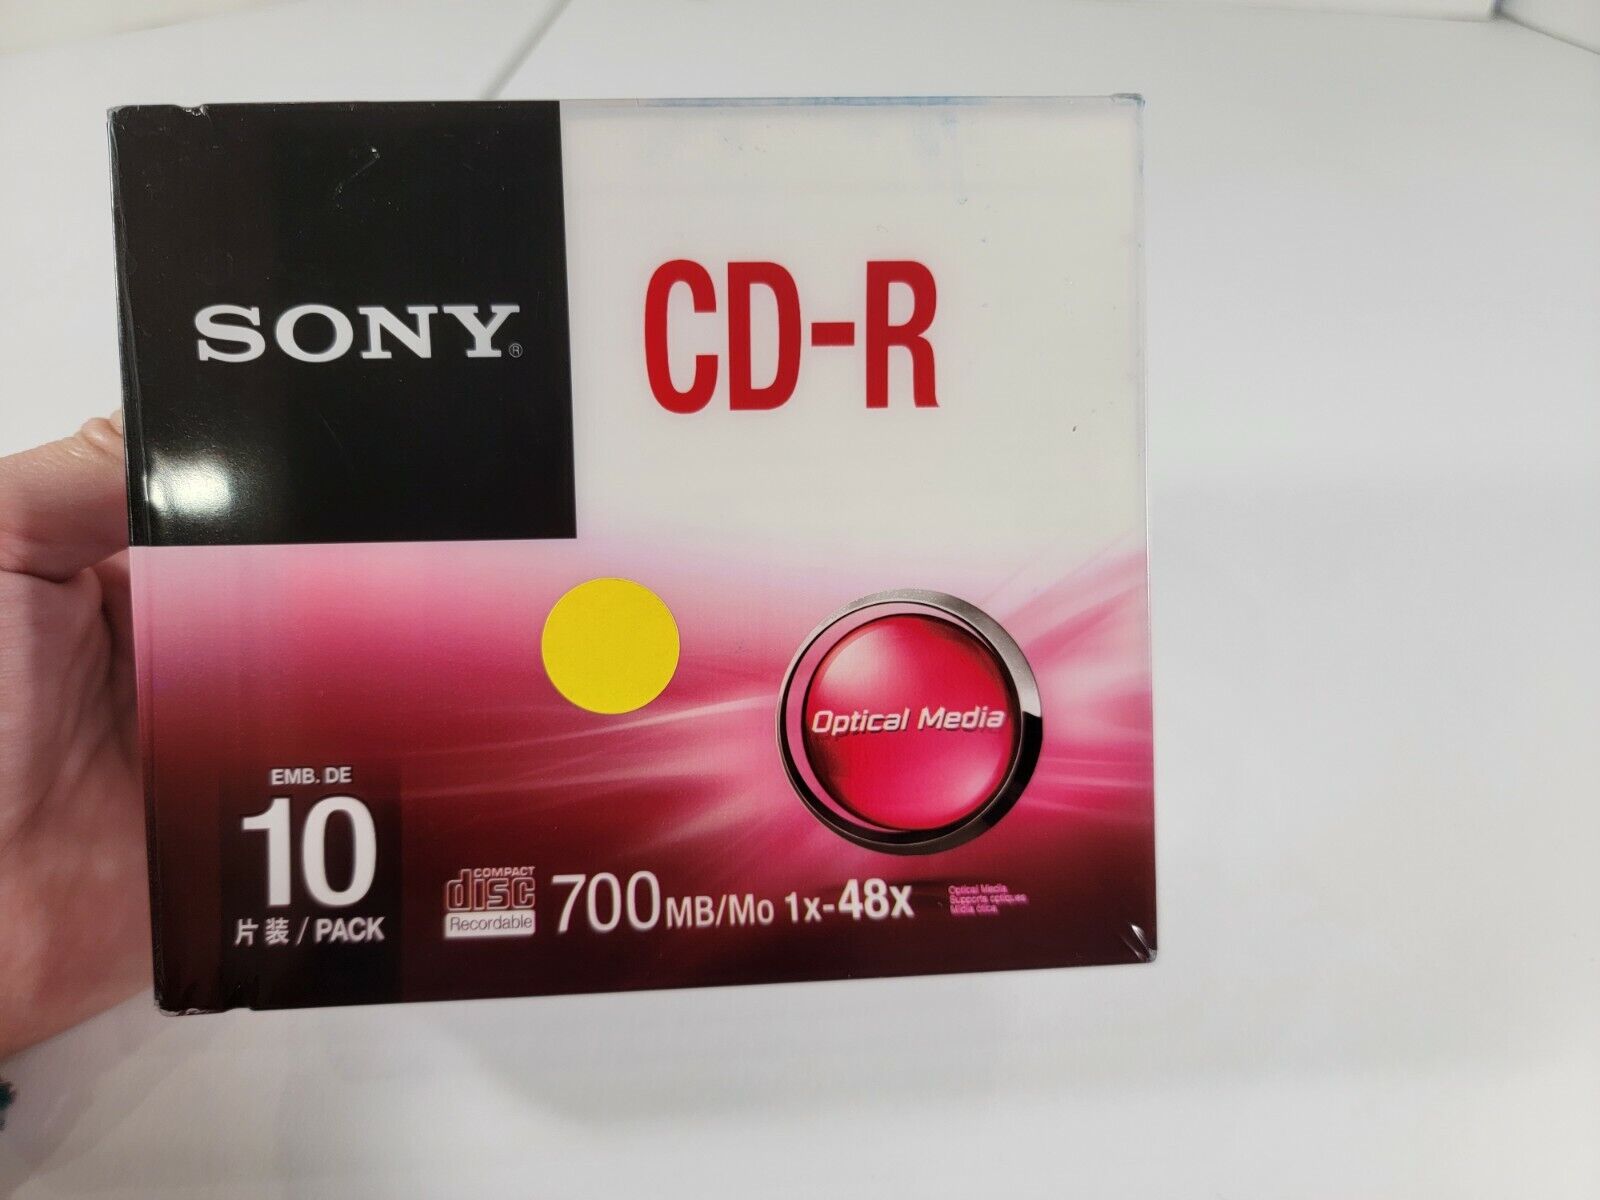 Sony CD-R 30 Pack (w/slim jcs)700MB/Mo 1x-48x speed Optical Media Factory Sealed